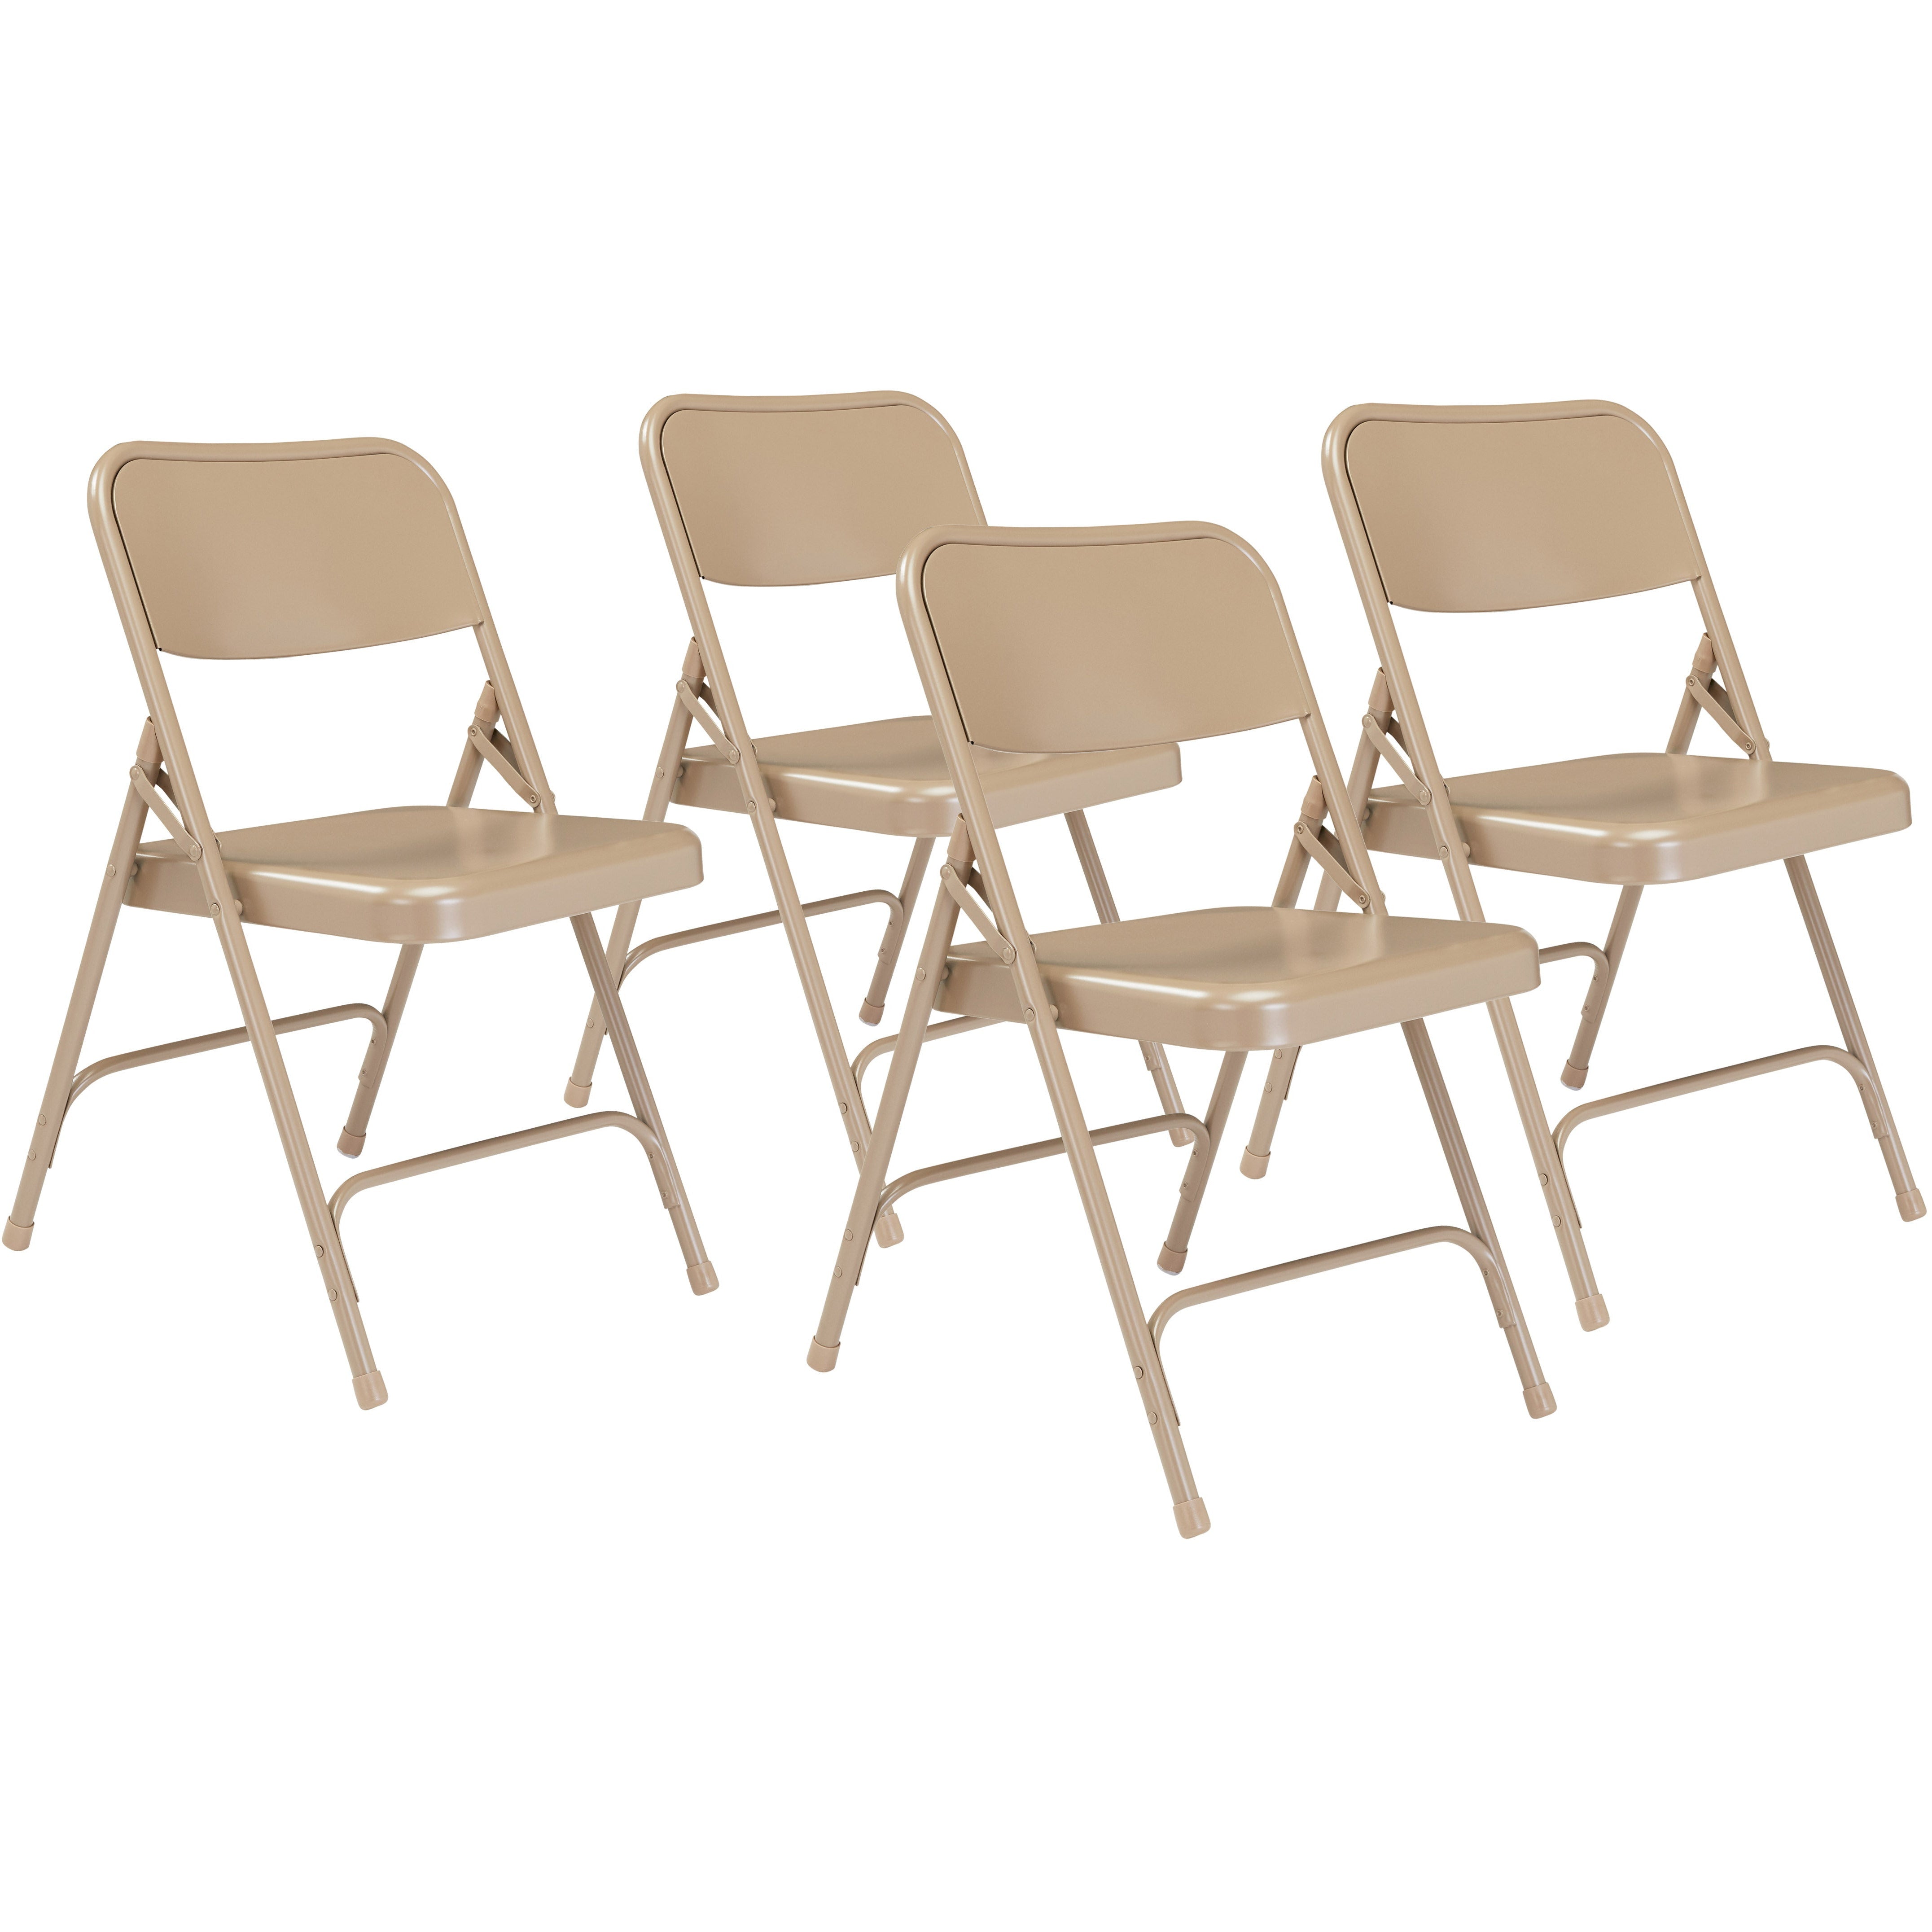 Premium All-Steel Double Hinge Folding Chair, Beige (Pack of 4)